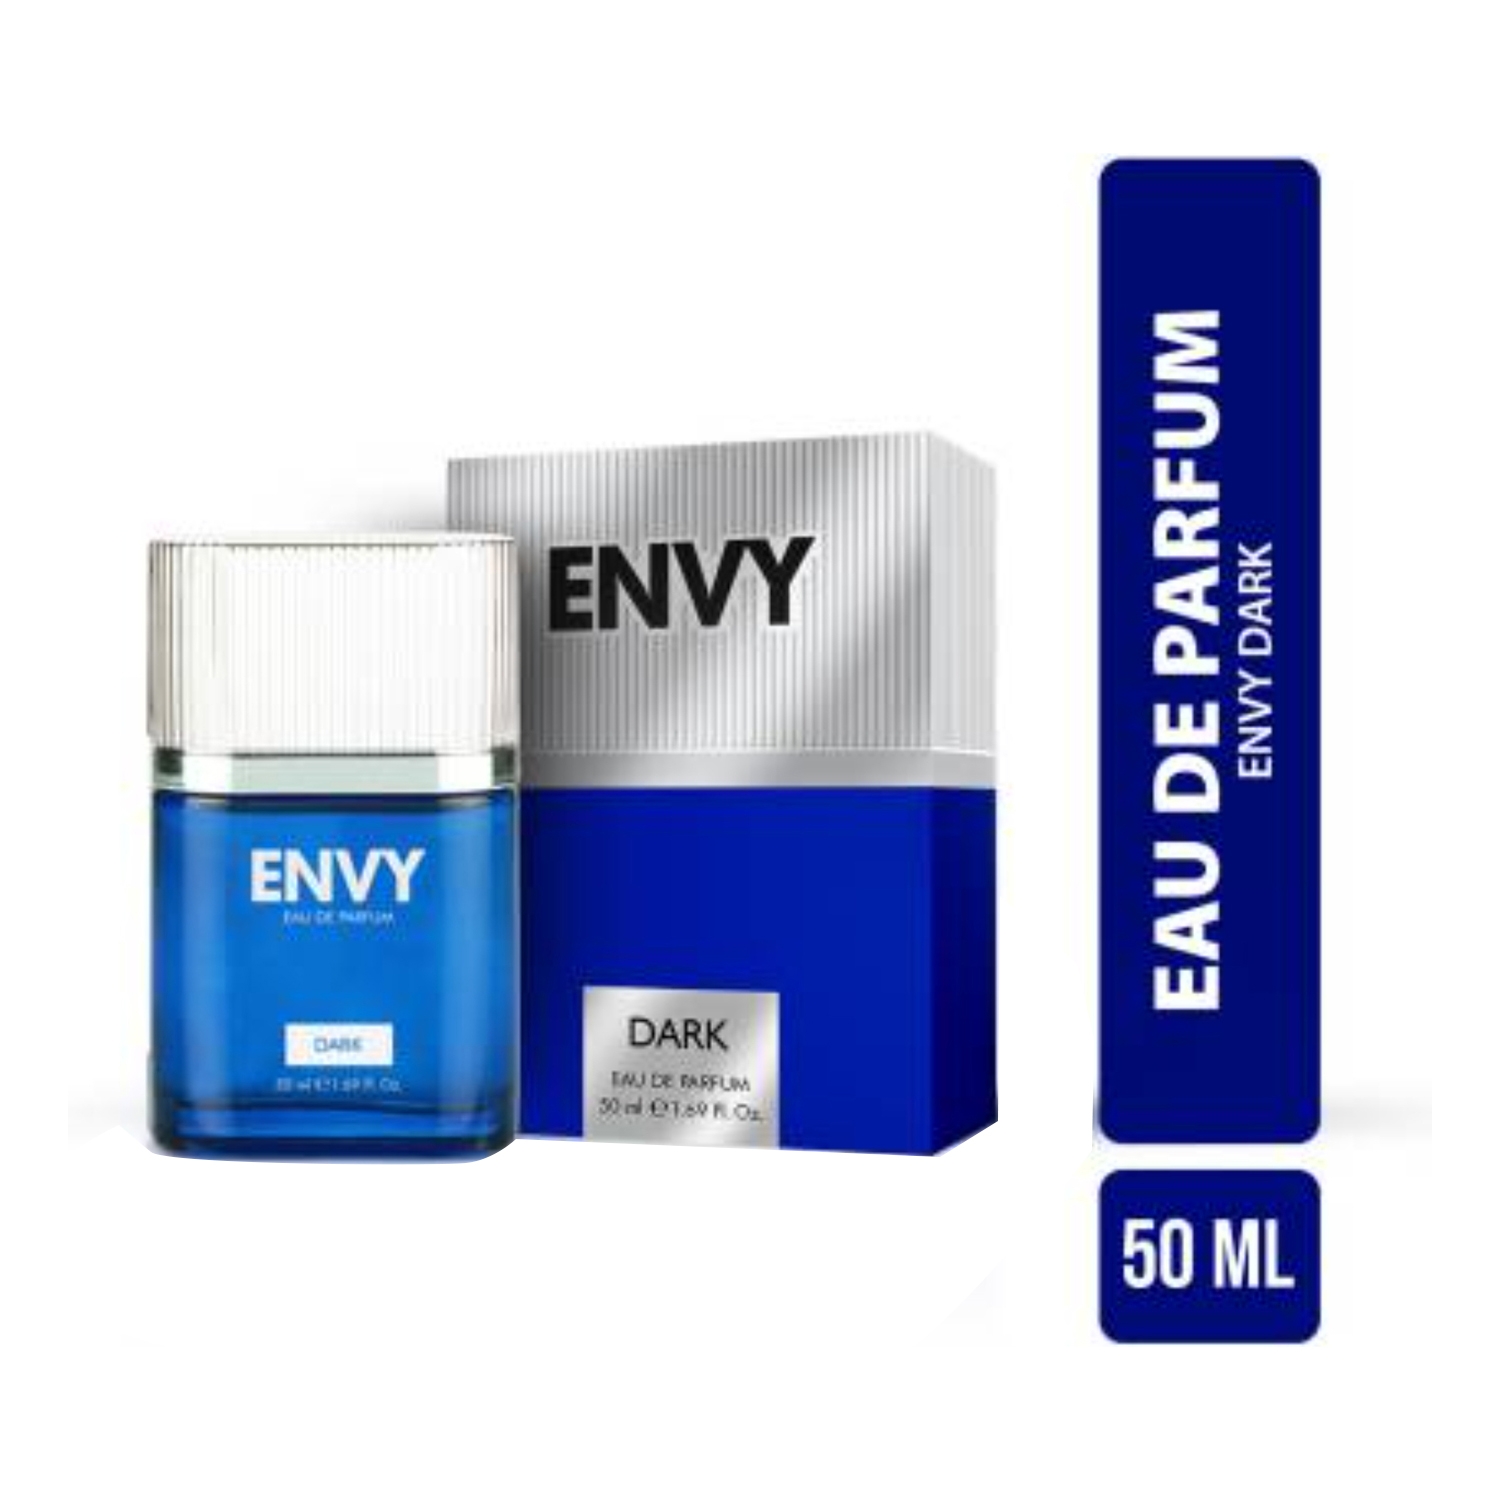 Envy | Envy Dark Eau De Parfum (50ml)